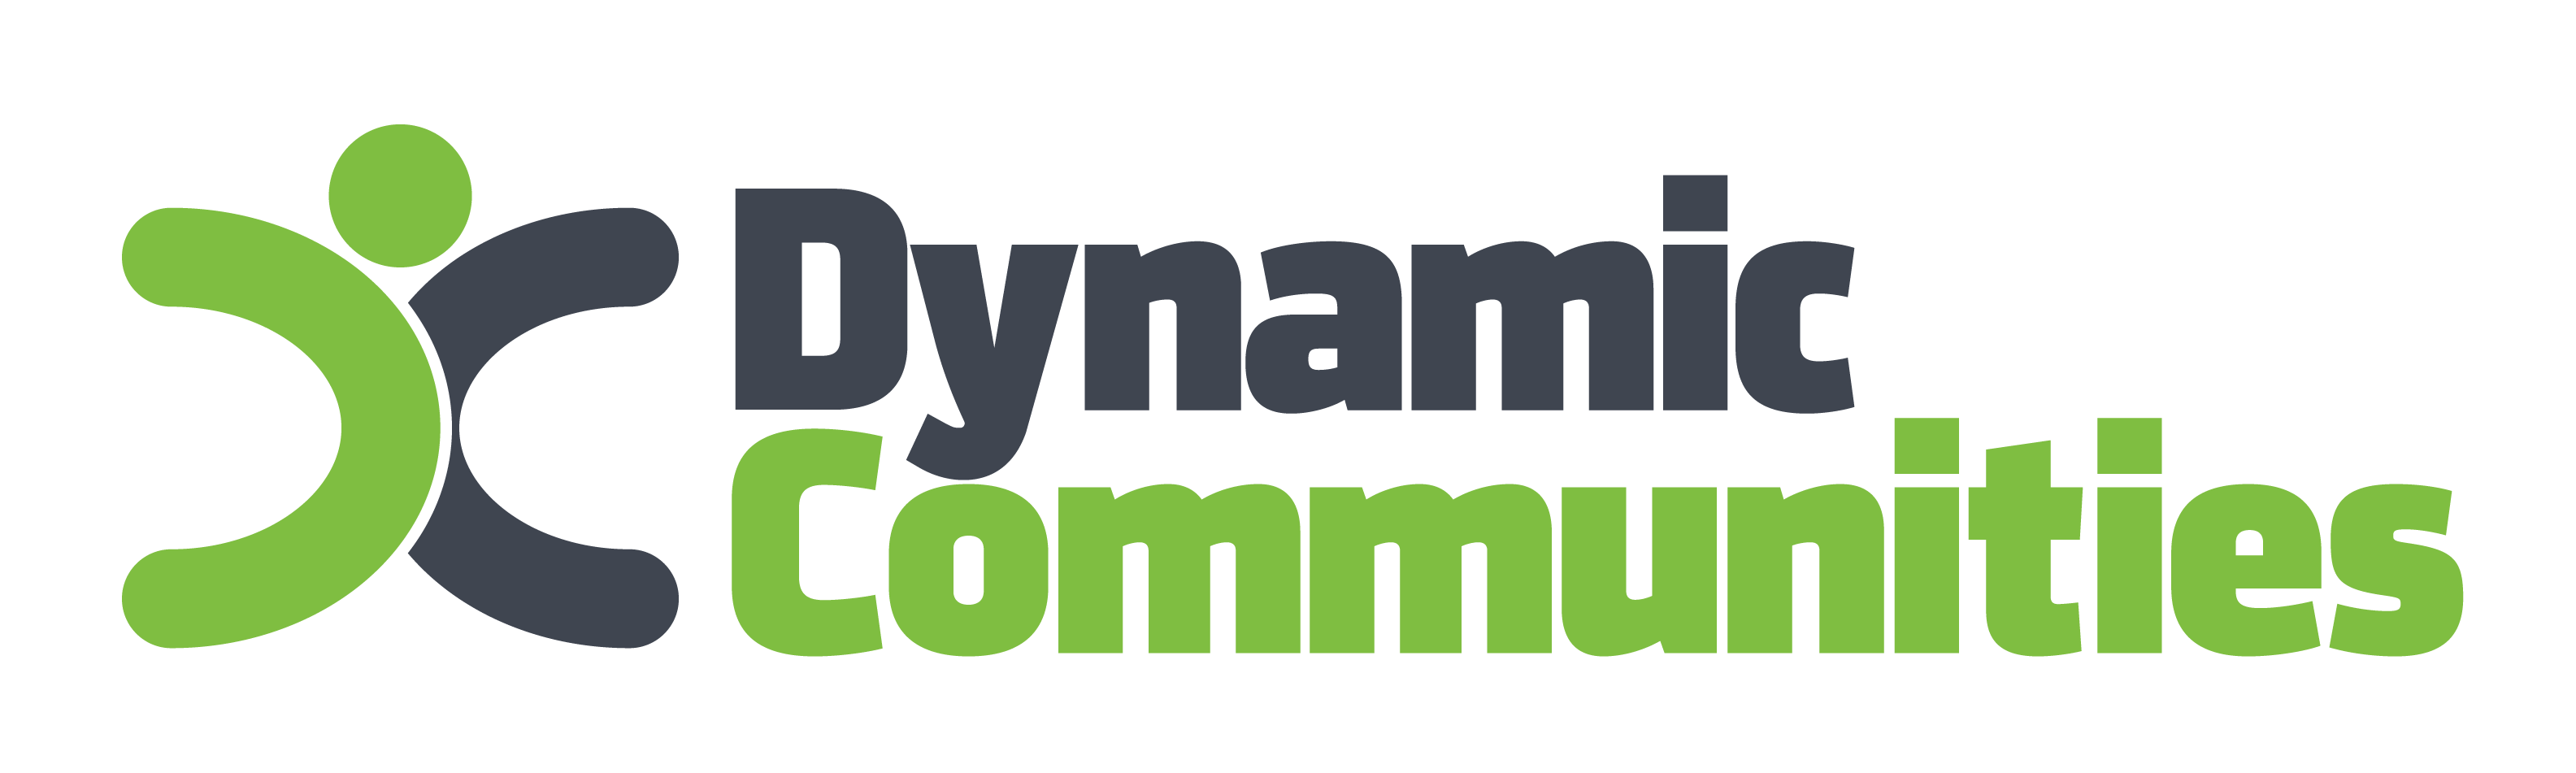 Dynamics Communities Logo